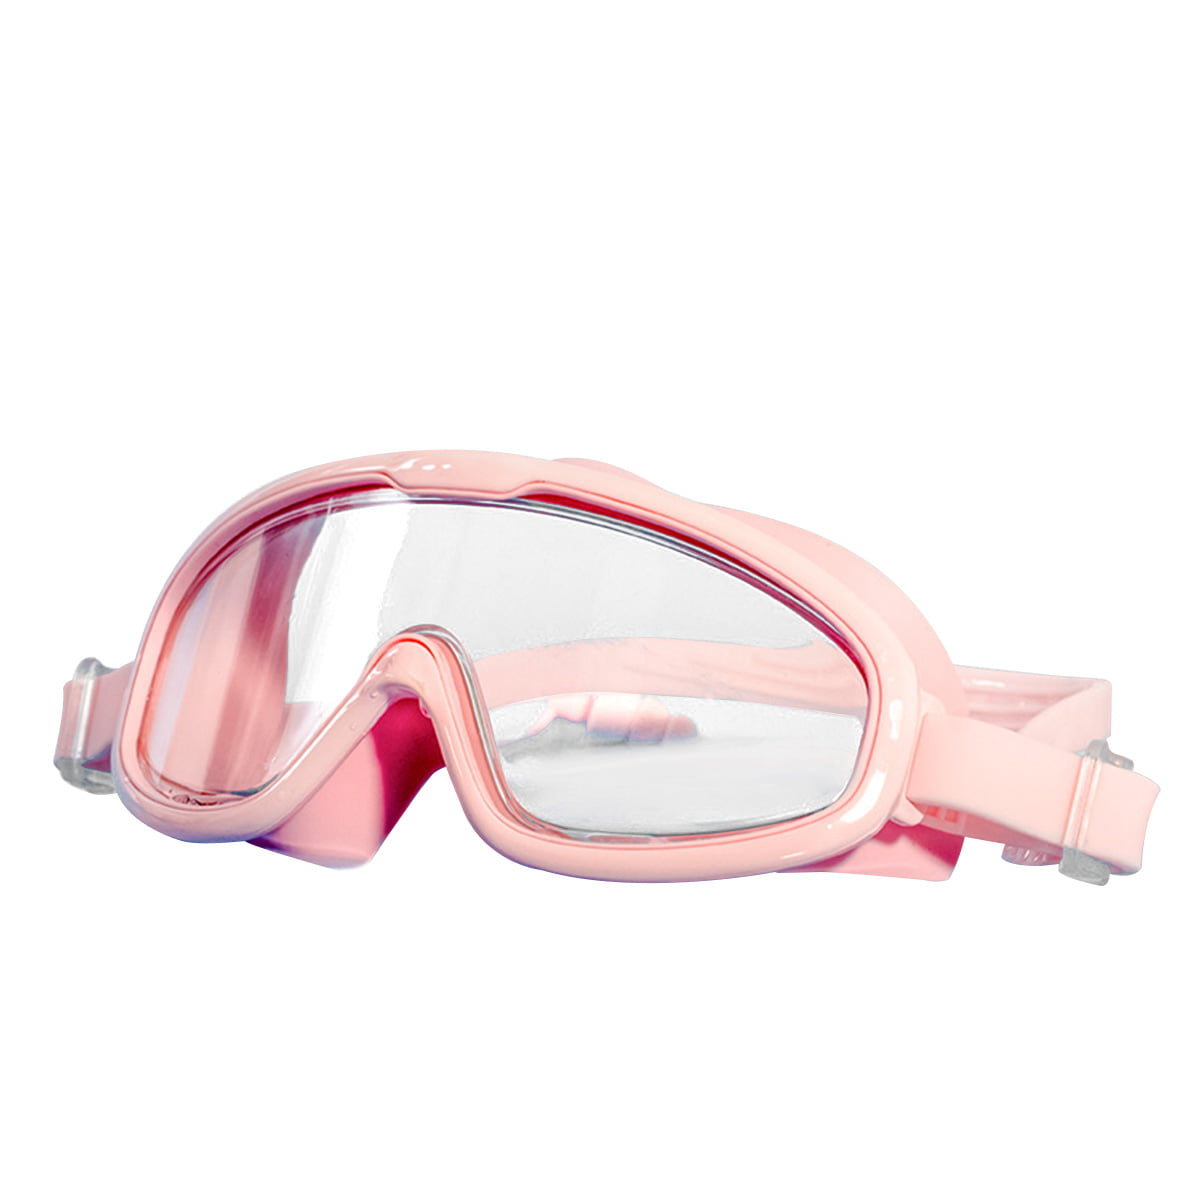 Premium Kids Big Frame Wide-Vision Swim Goggles for Children Girls BoysAge 6-15 